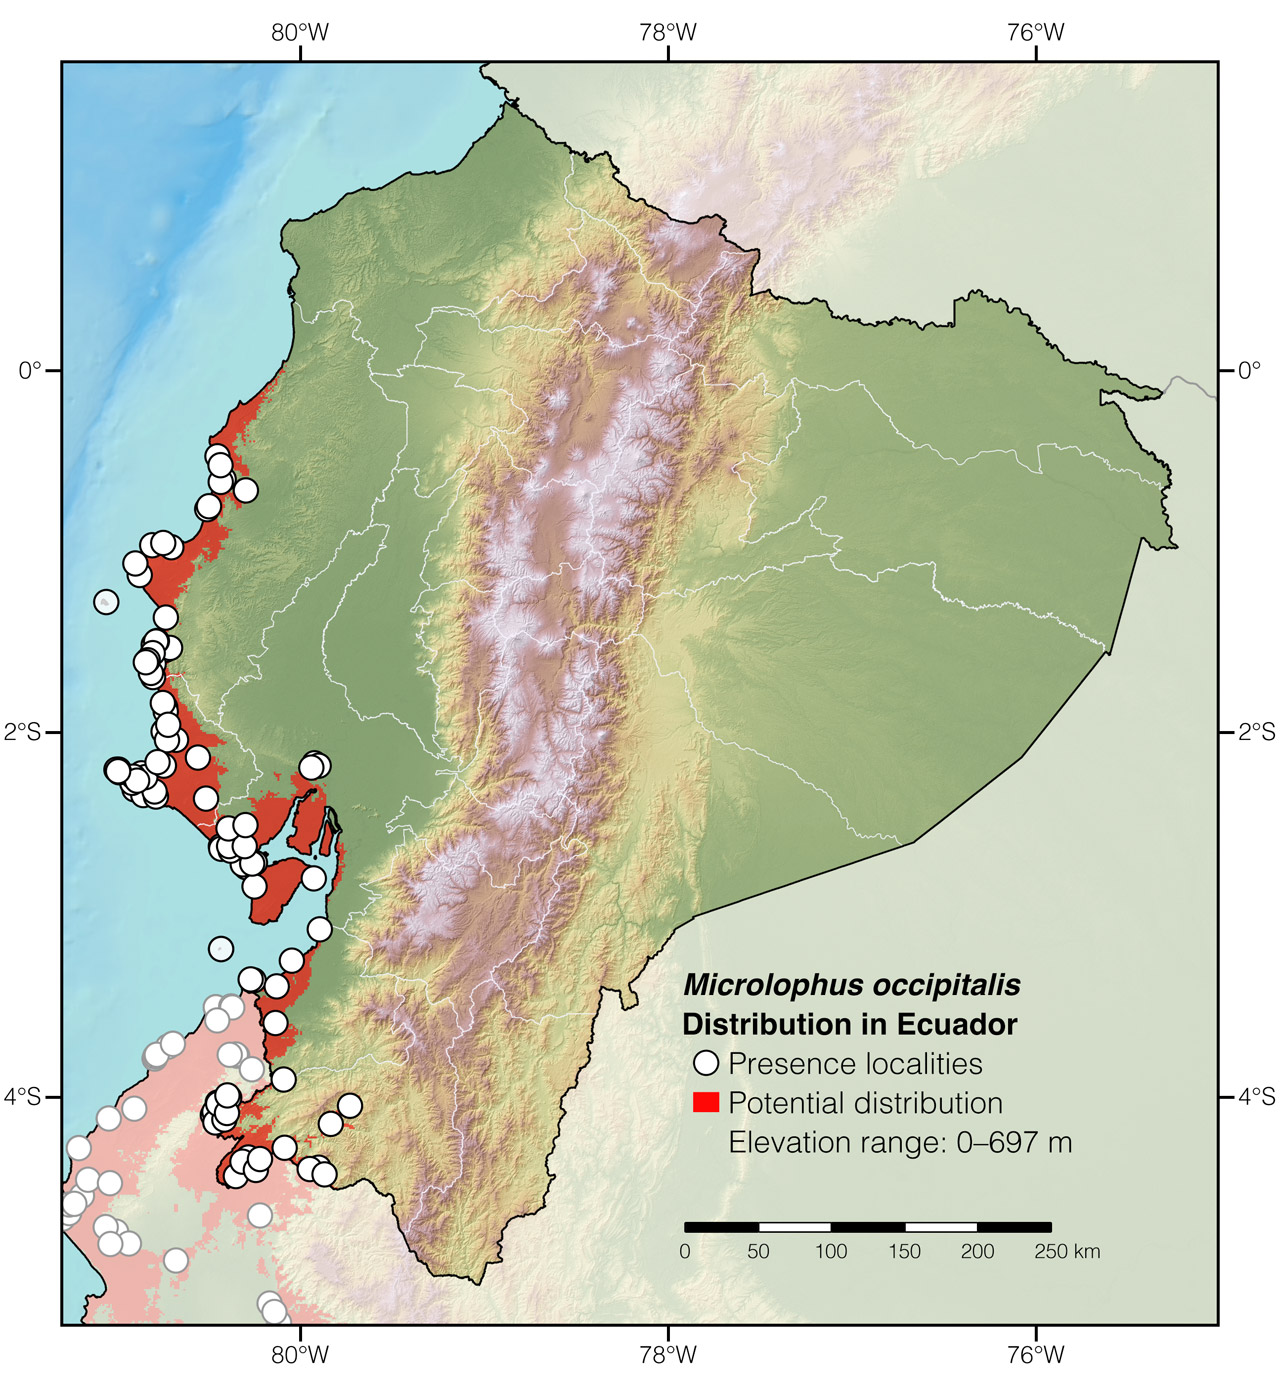 Distribution of Microlophus occipitalis in Ecuador